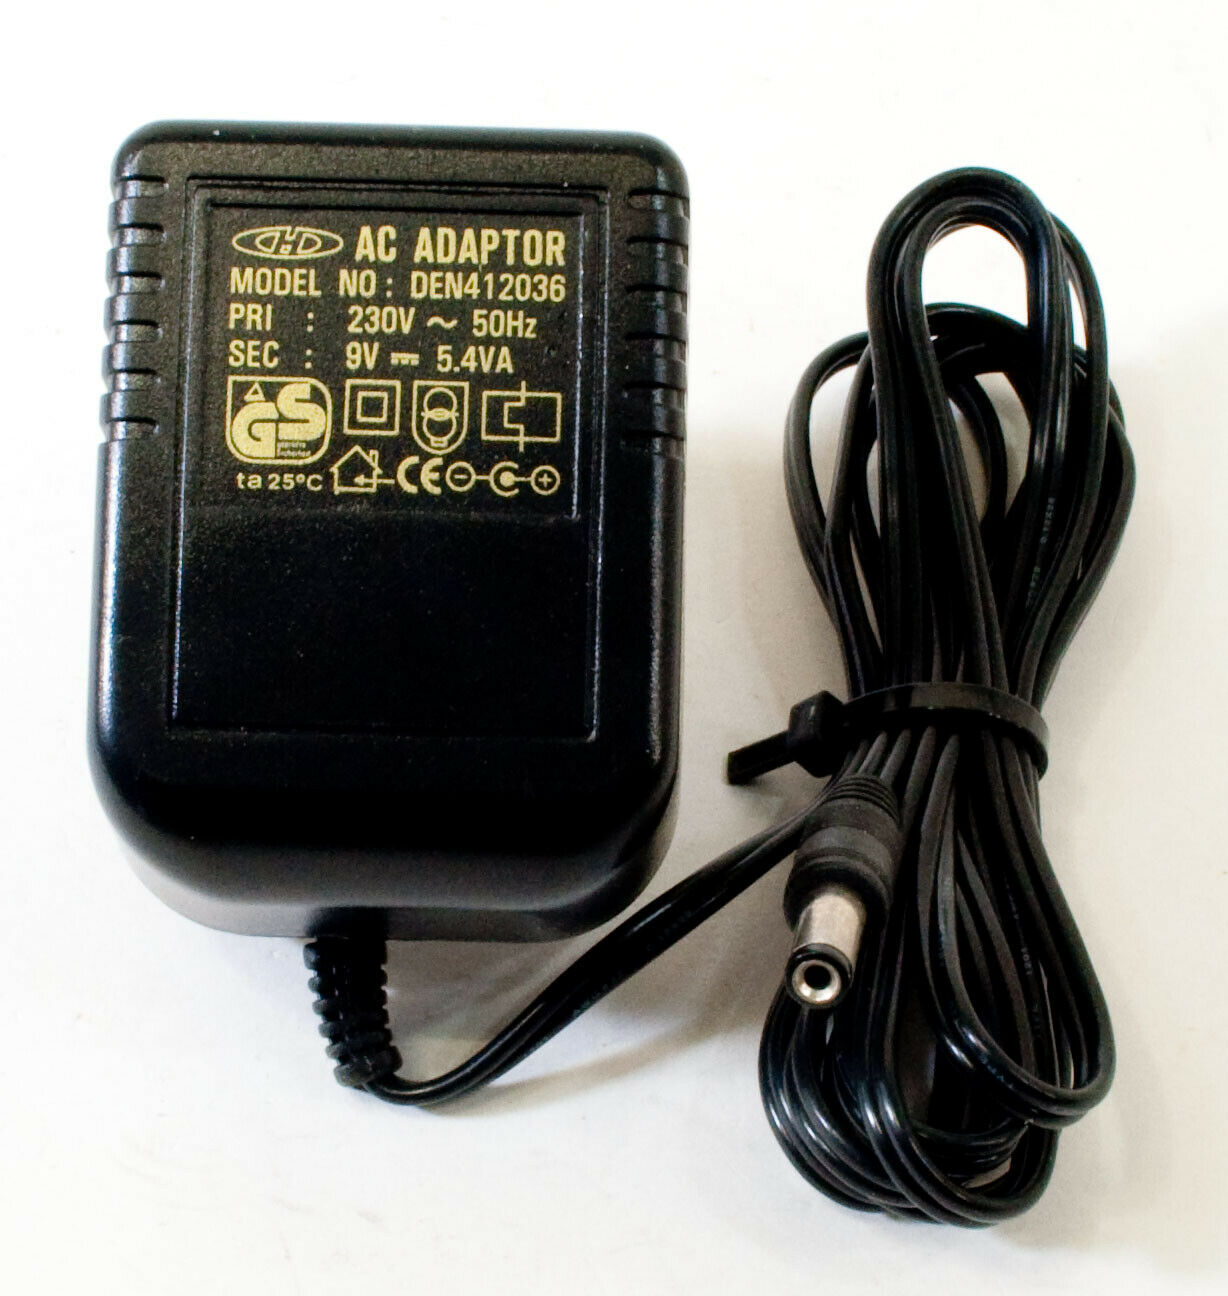 GS DEN412036 AC Adapter 9V 5.4VA Original Power Supply Europlug Type: Unit MPN: